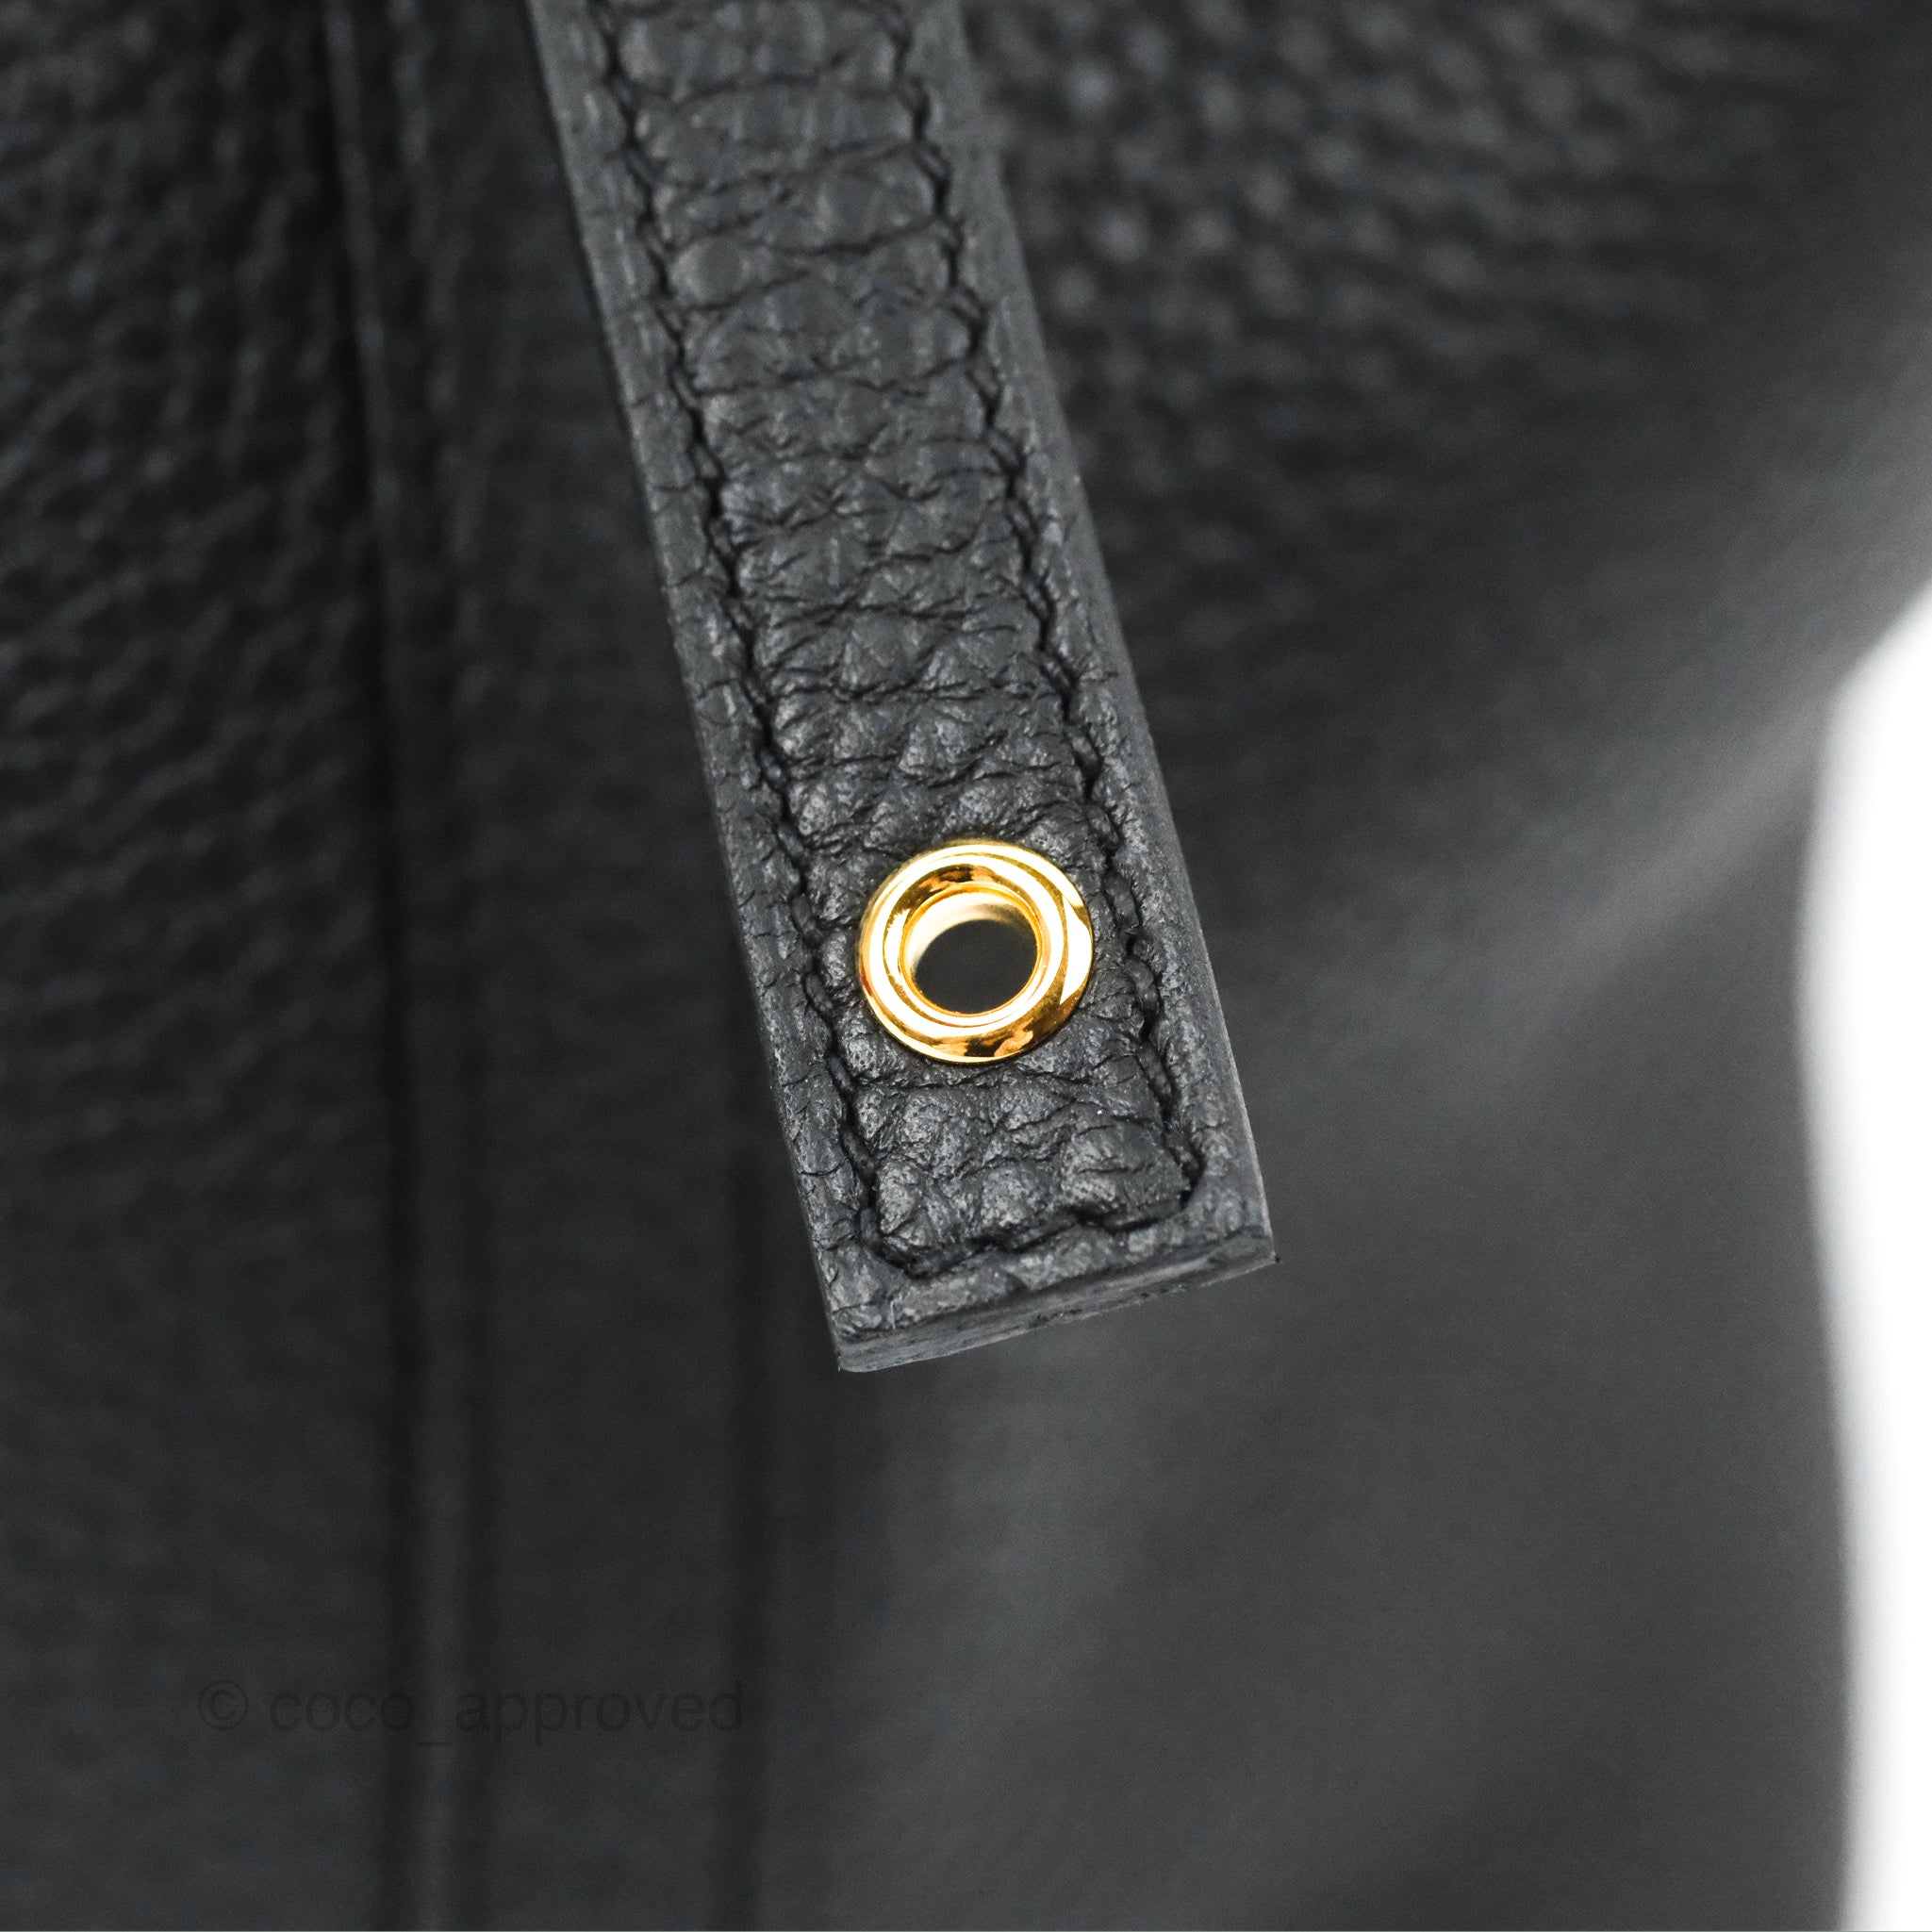 Hermès Picotin Lock 18 PM Eclat Alezan/Biscuit Clemence Silver Hardwar –  Coco Approved Studio